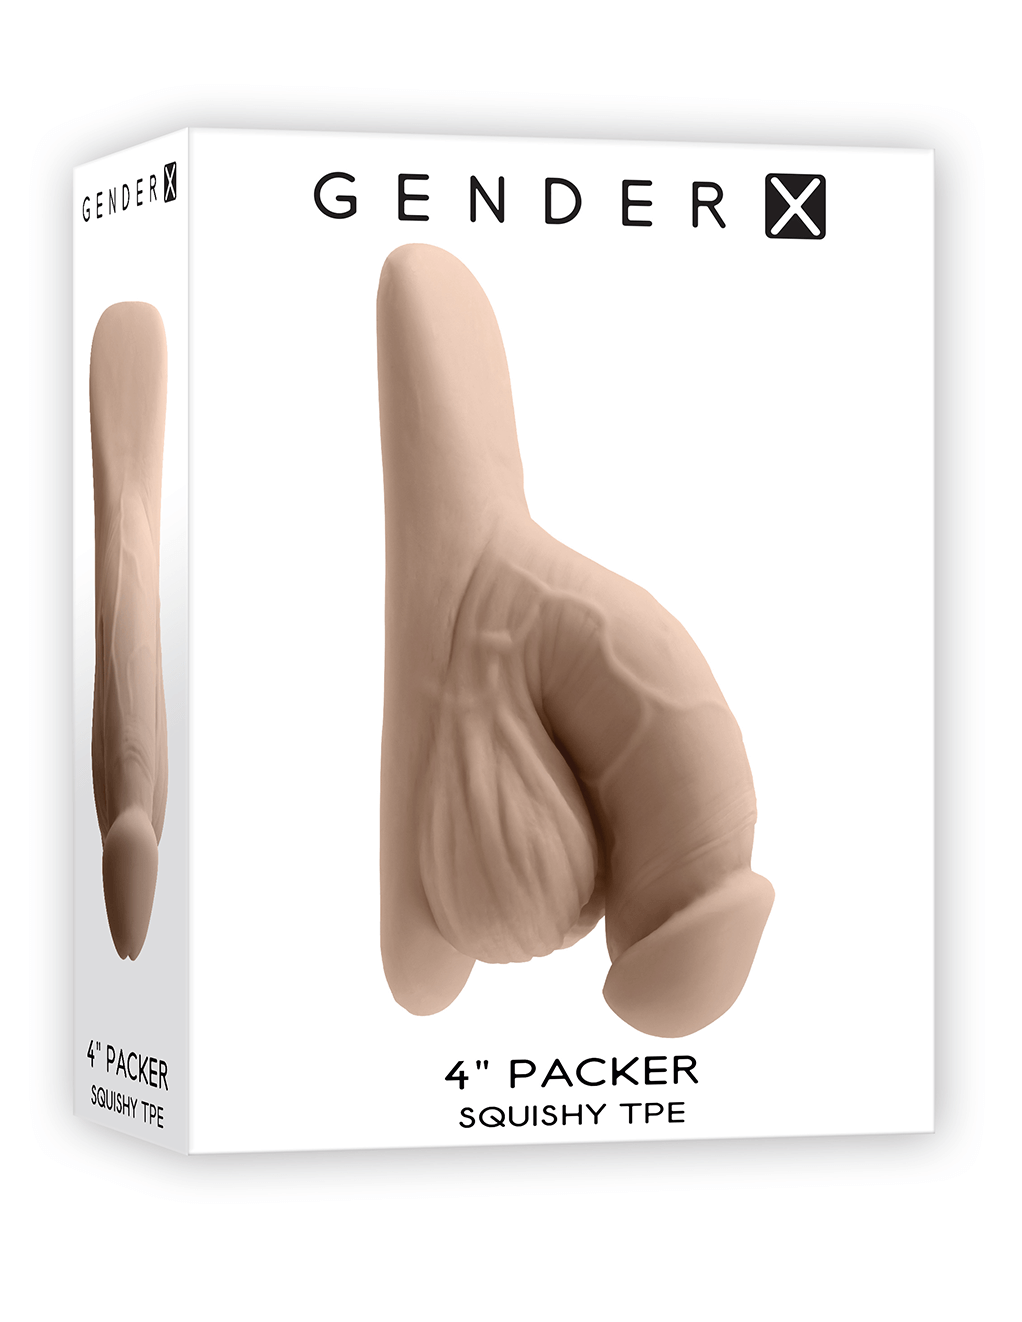 Gender X 4" Packer - Vanilla - Box